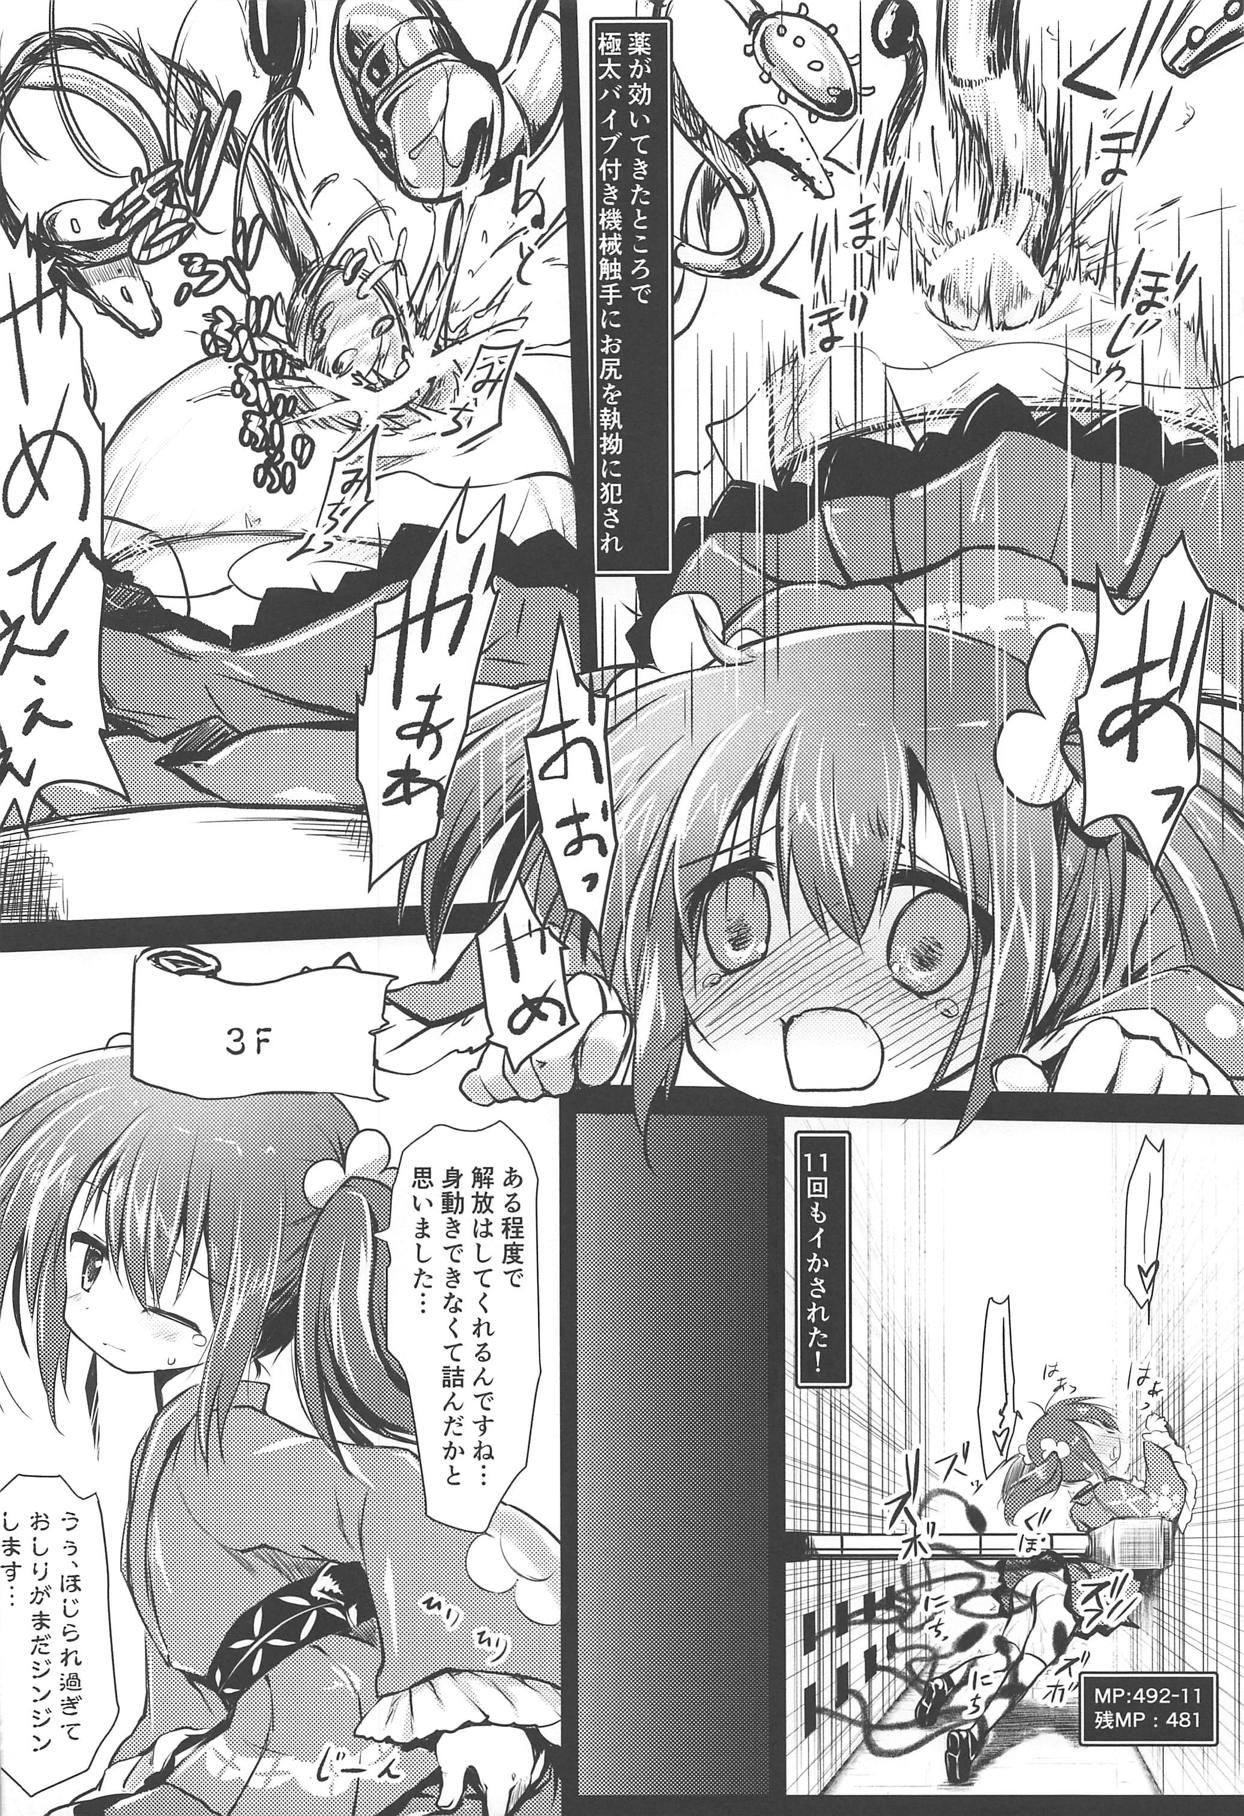 Celebrities Nishikigi VS Ero Trap D - Flower knight girl Step - Page 9